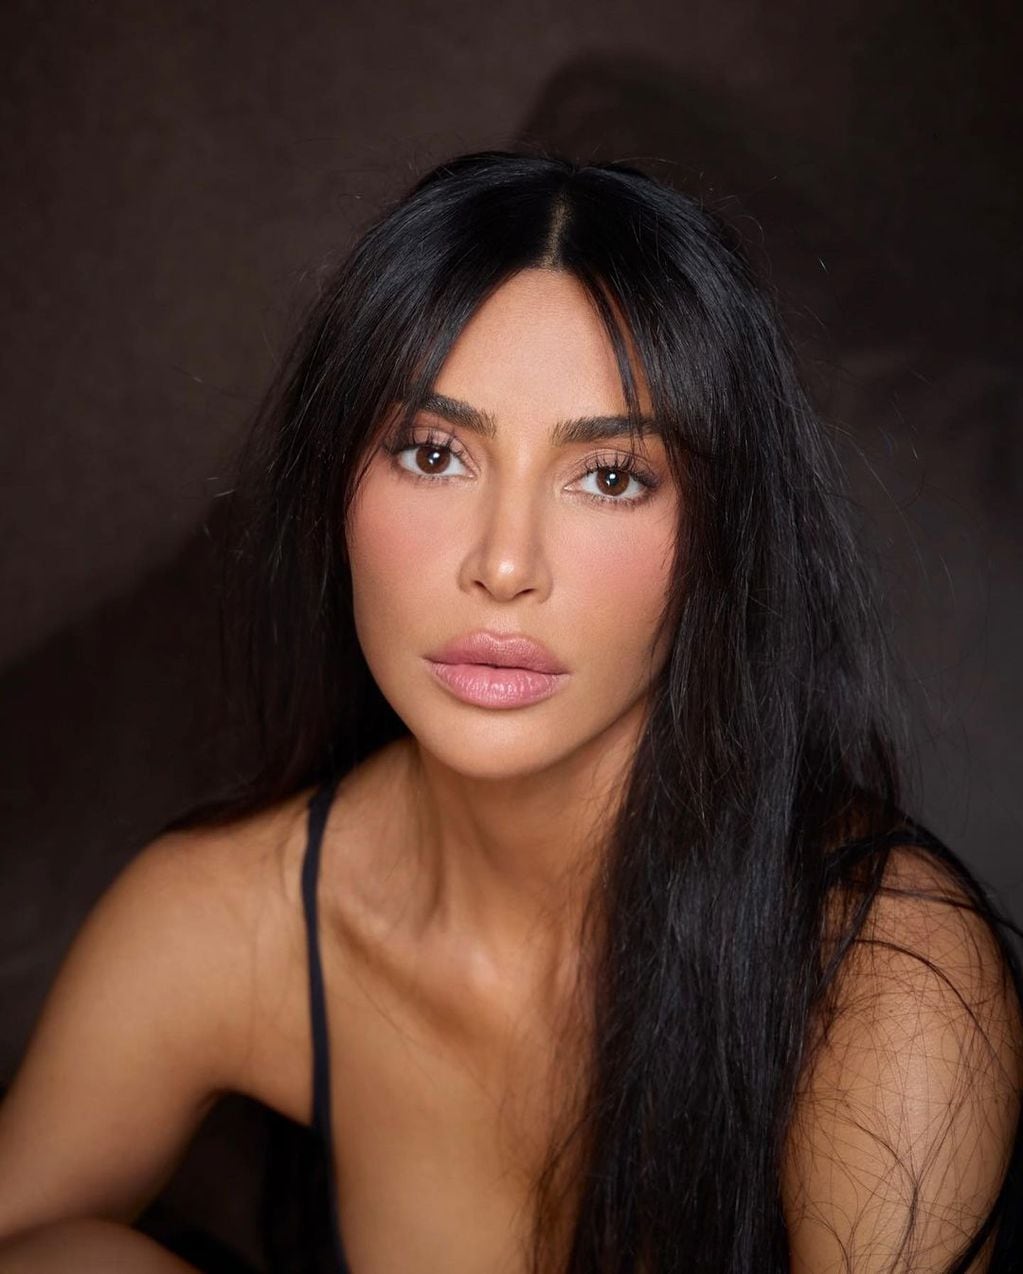 Las fotos de belleza de Kim Kardashian que generaron polémica